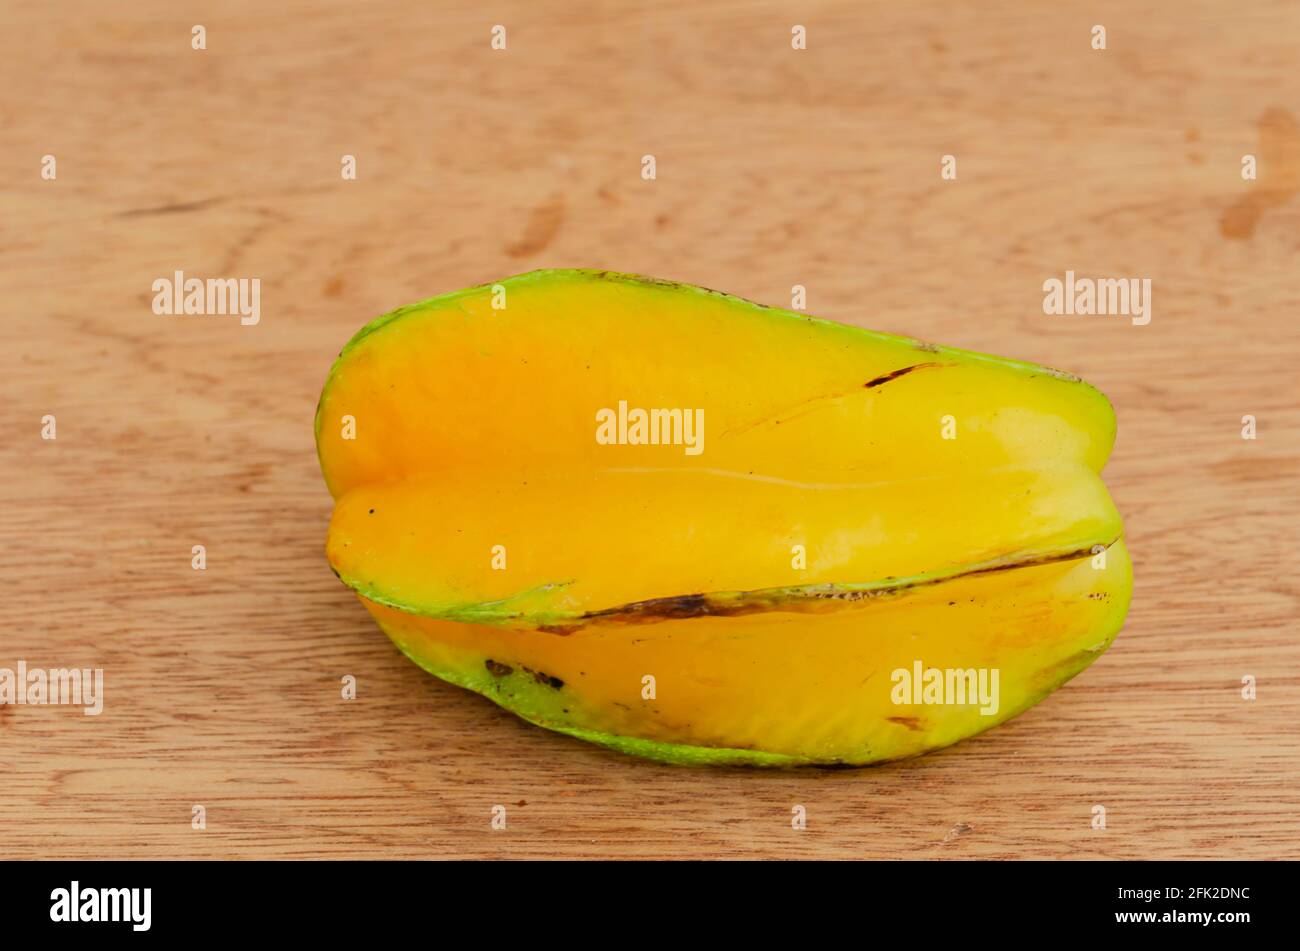 Elongated Ripe Star Fruit Stock Photo